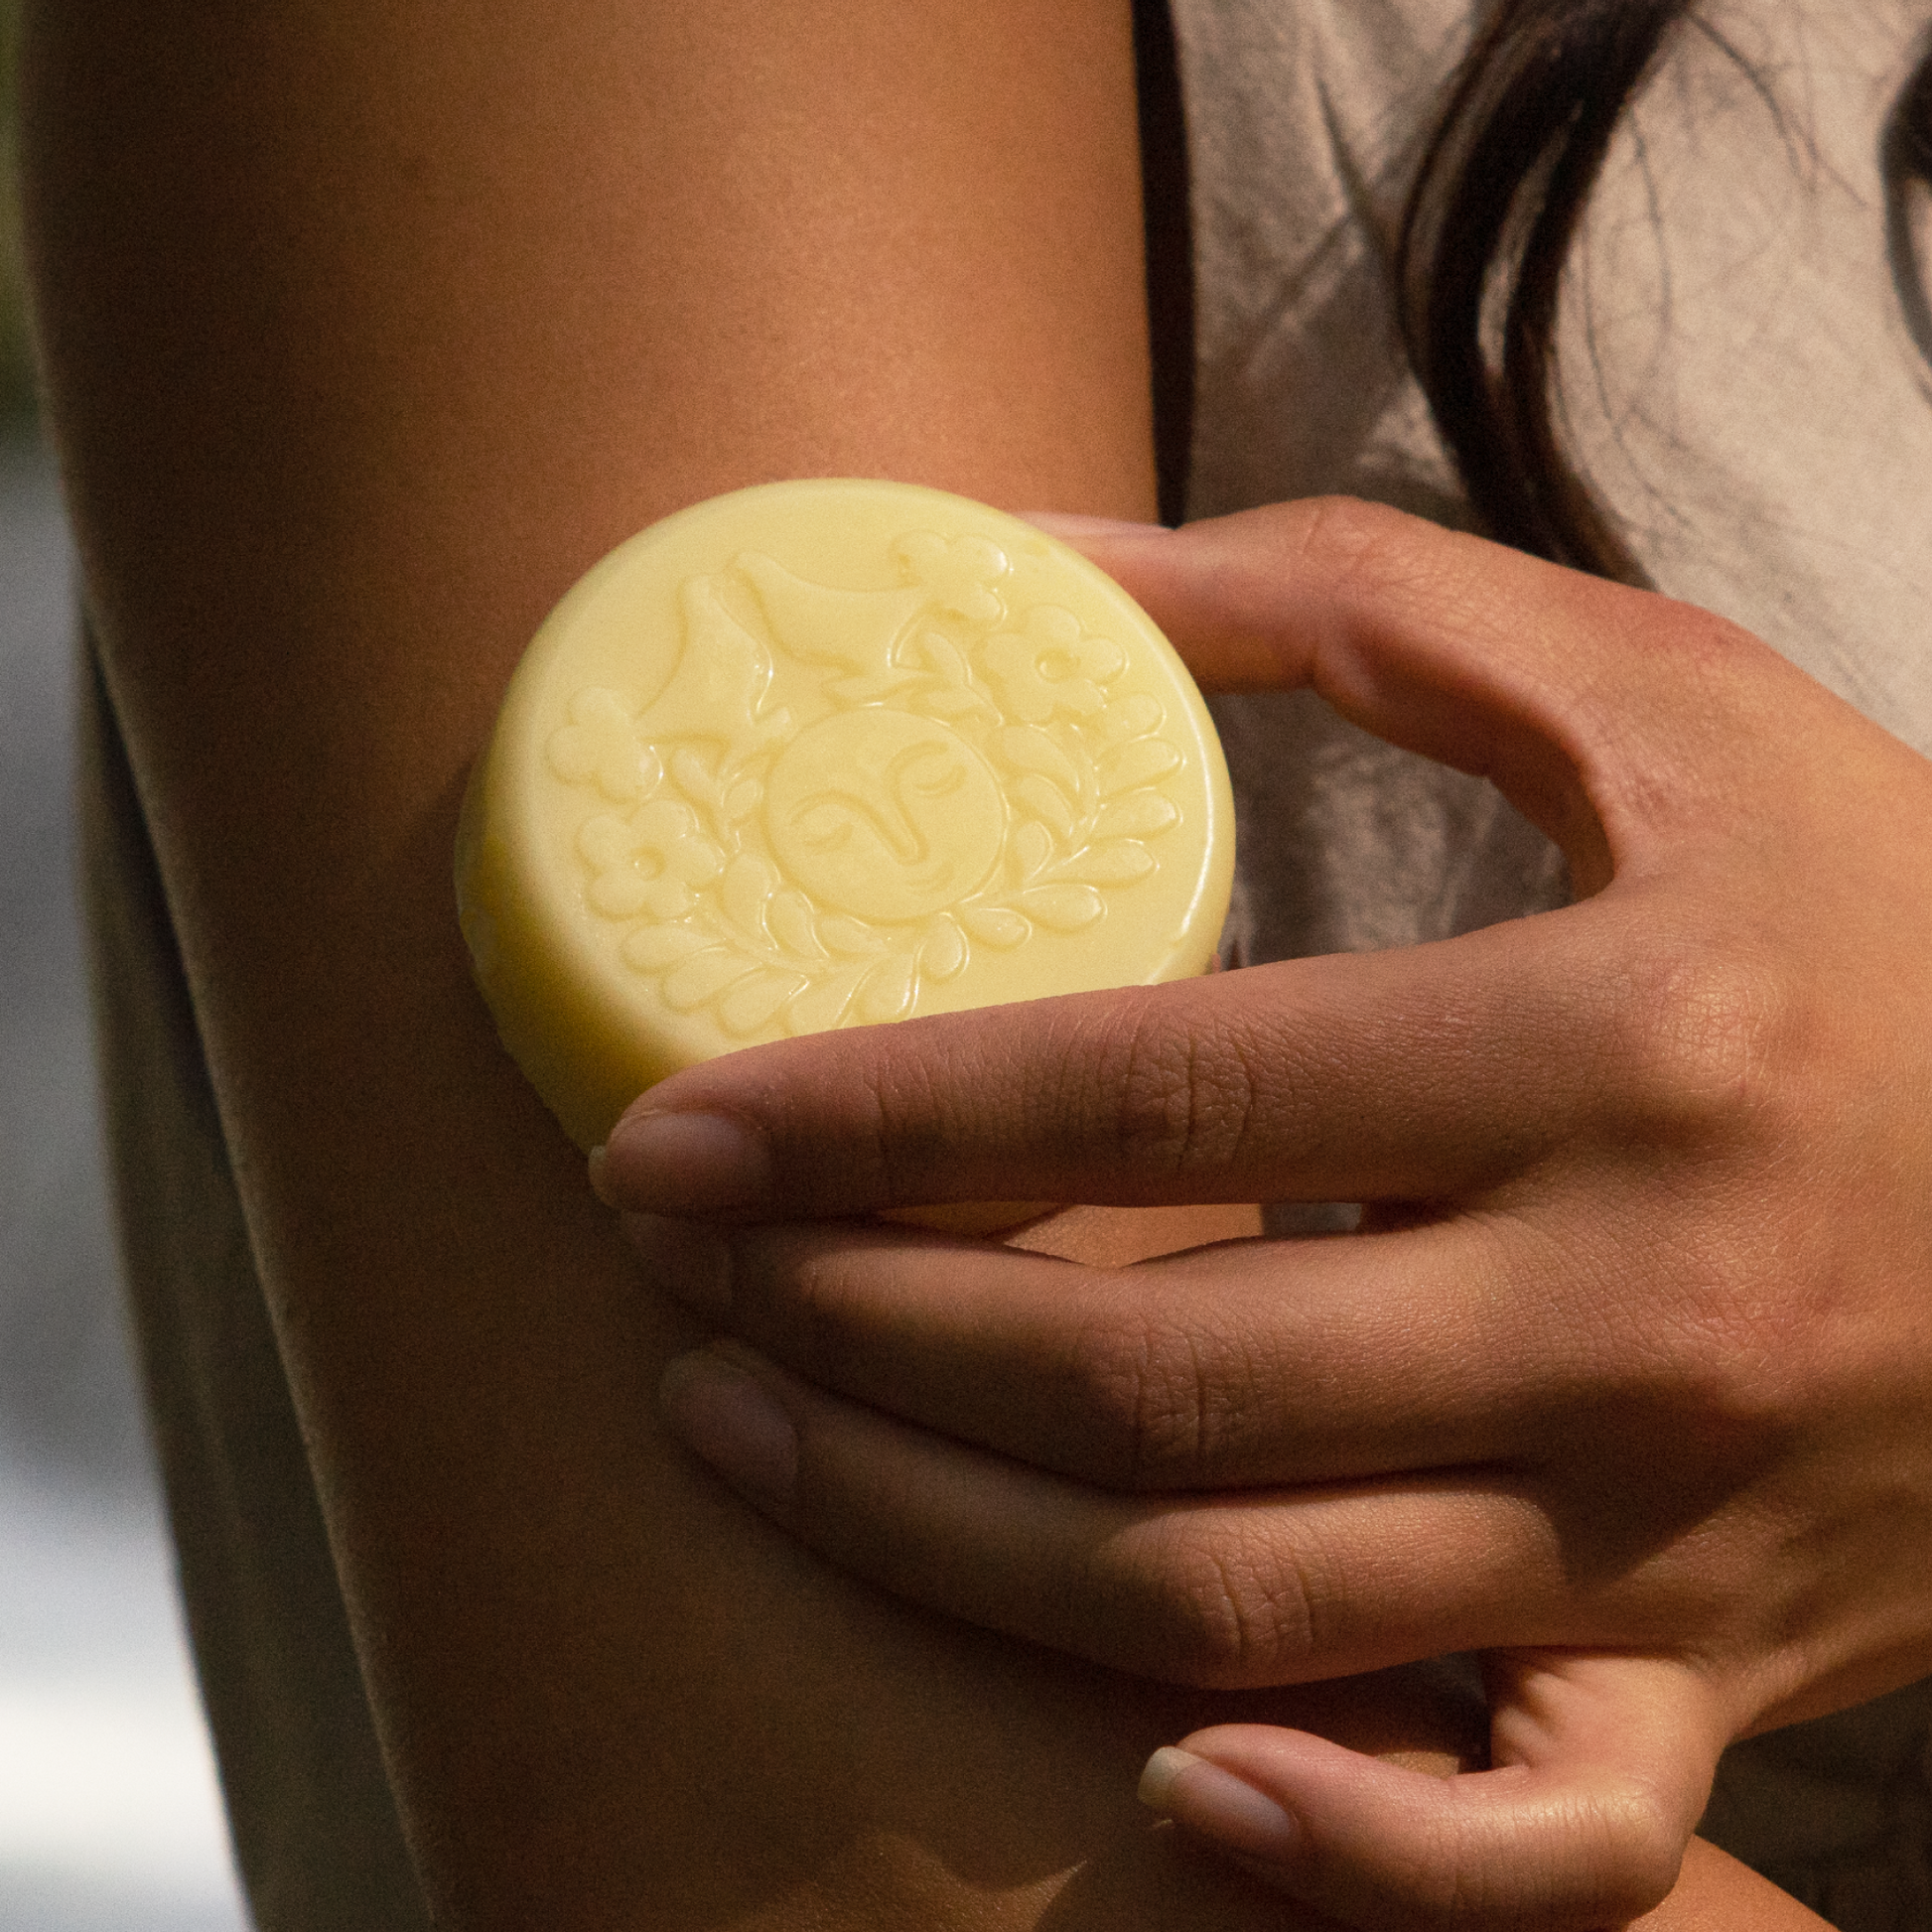 Moon Valley Organics Herbal Lotion Bar Hand rubs lotion bar on arm